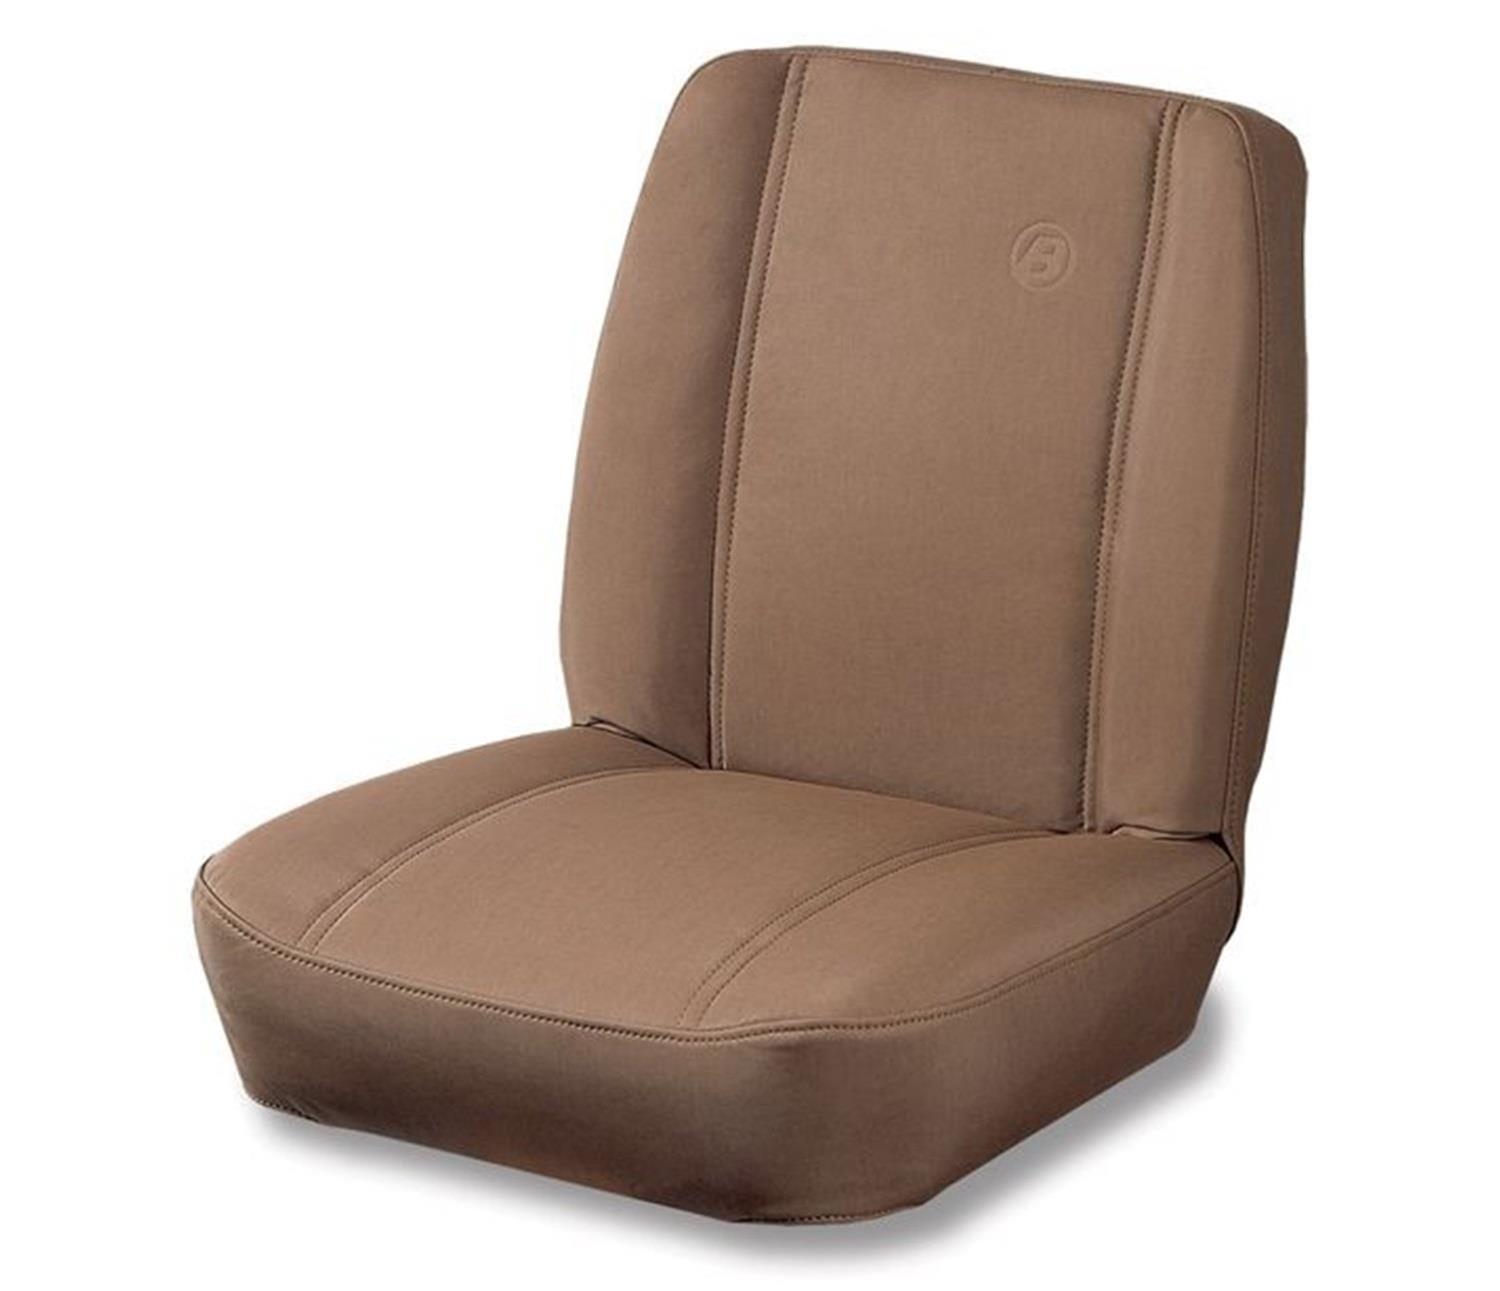 Bestop 39438-37 Trailmax II Sport Seat Front Center Fabric Insert Spice 